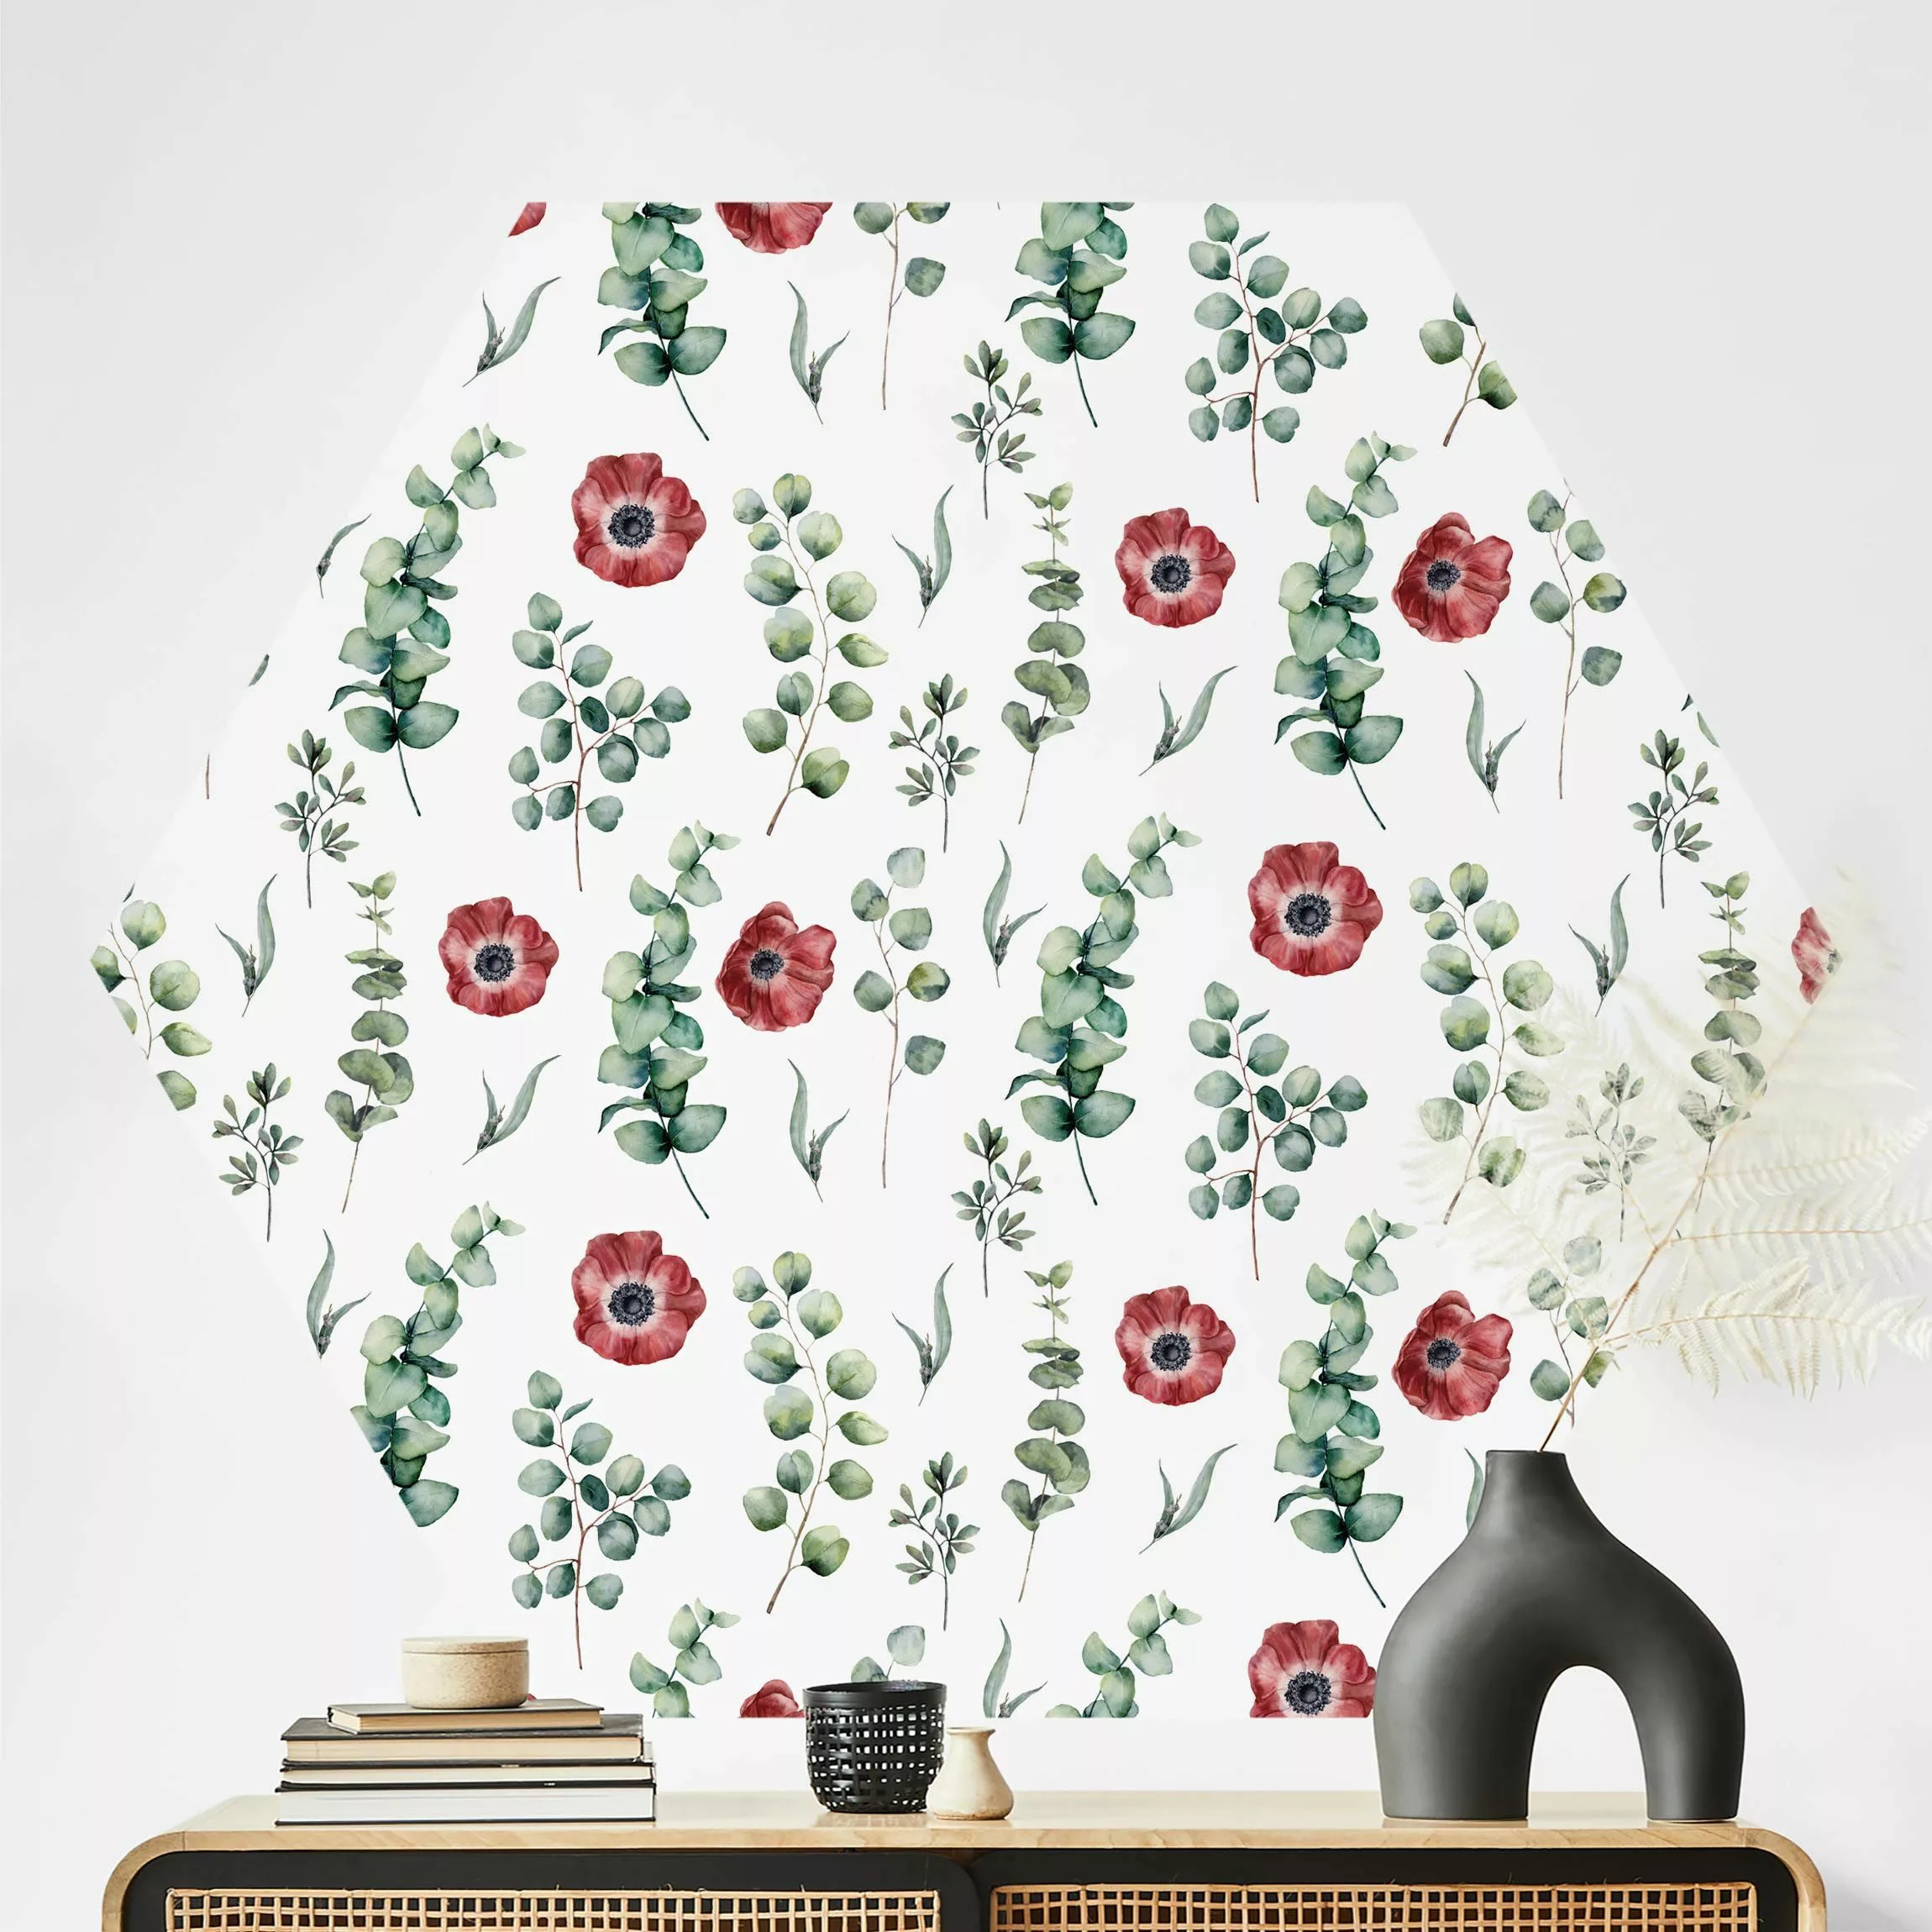 Hexagon Mustertapete selbstklebend Aquarell Muster Eukalyptus und Blüten günstig online kaufen